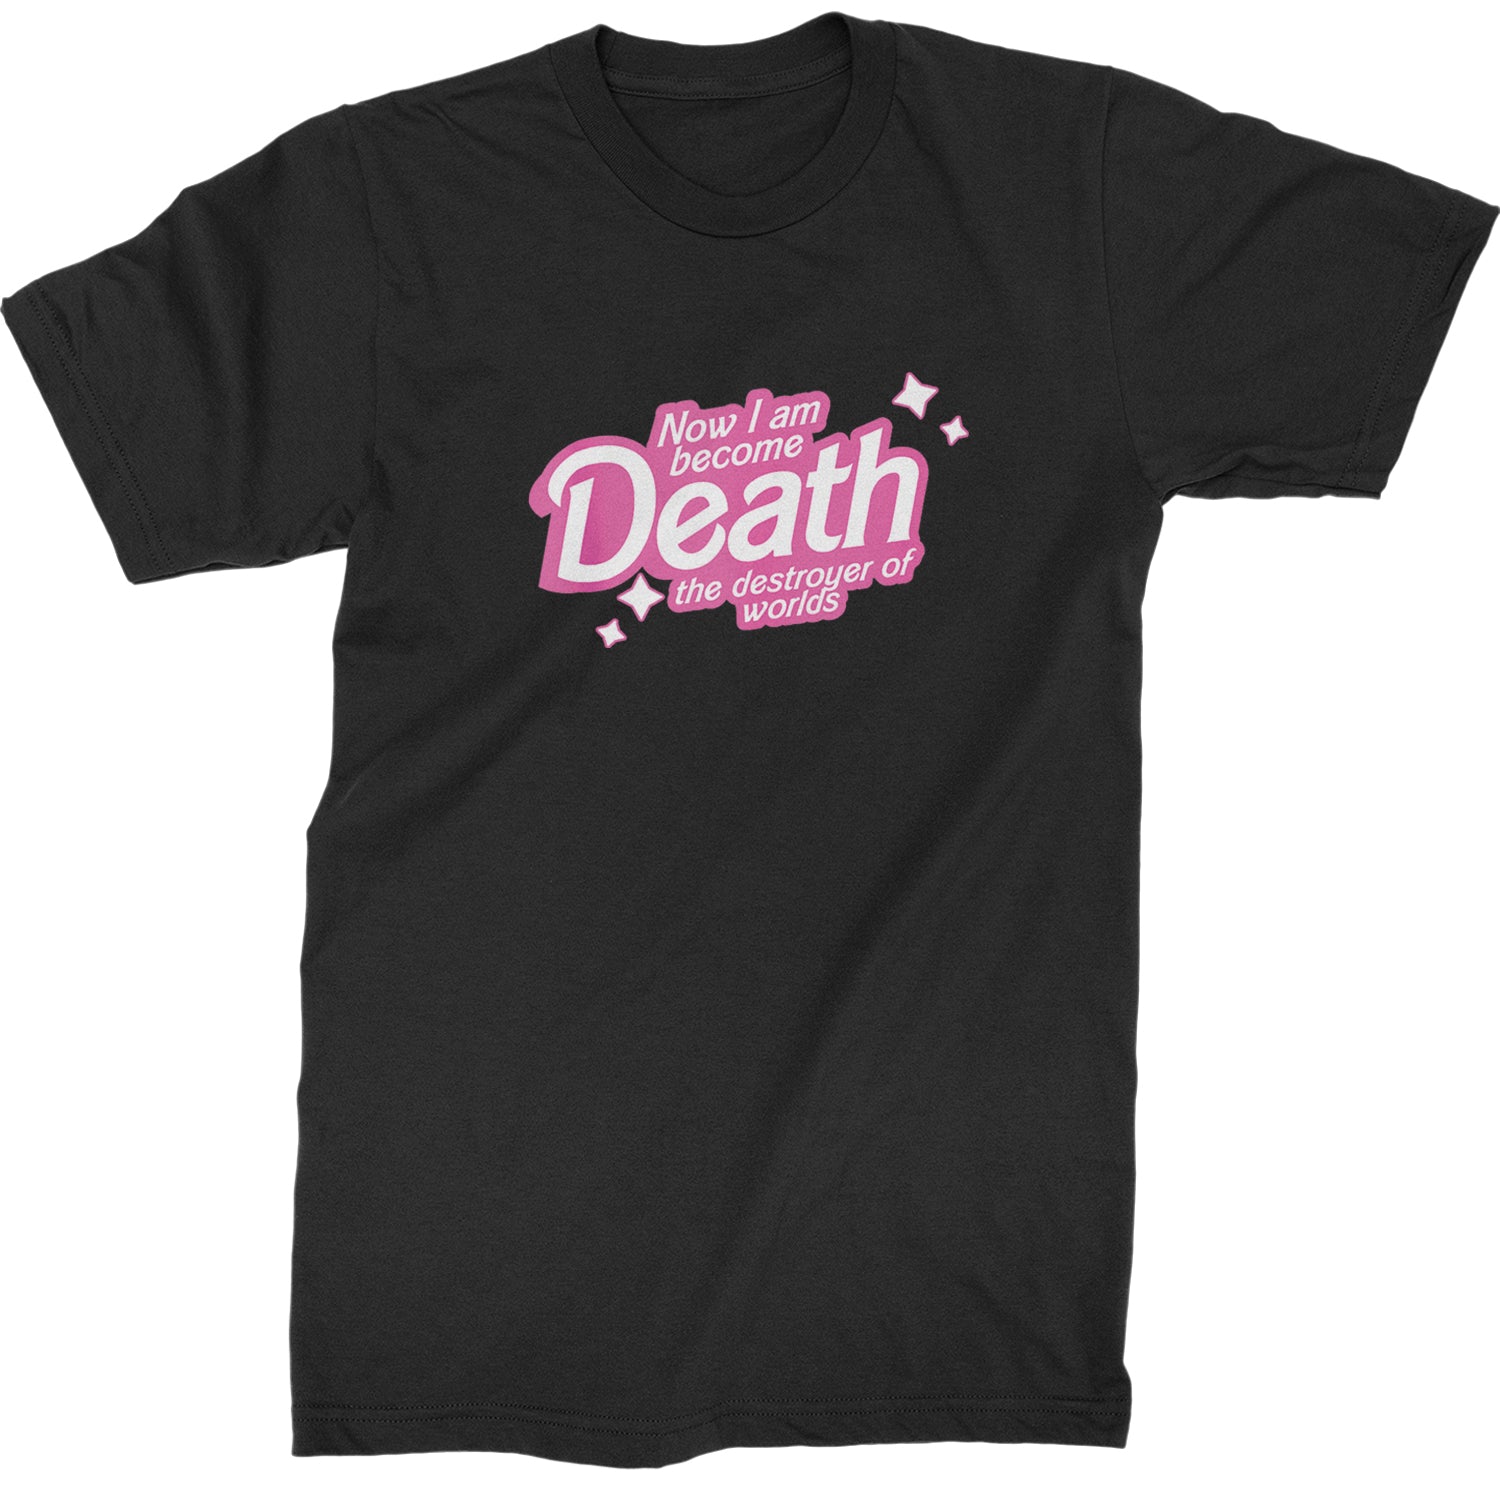 Now I am Become Death Barbenheimer Mens T-shirt